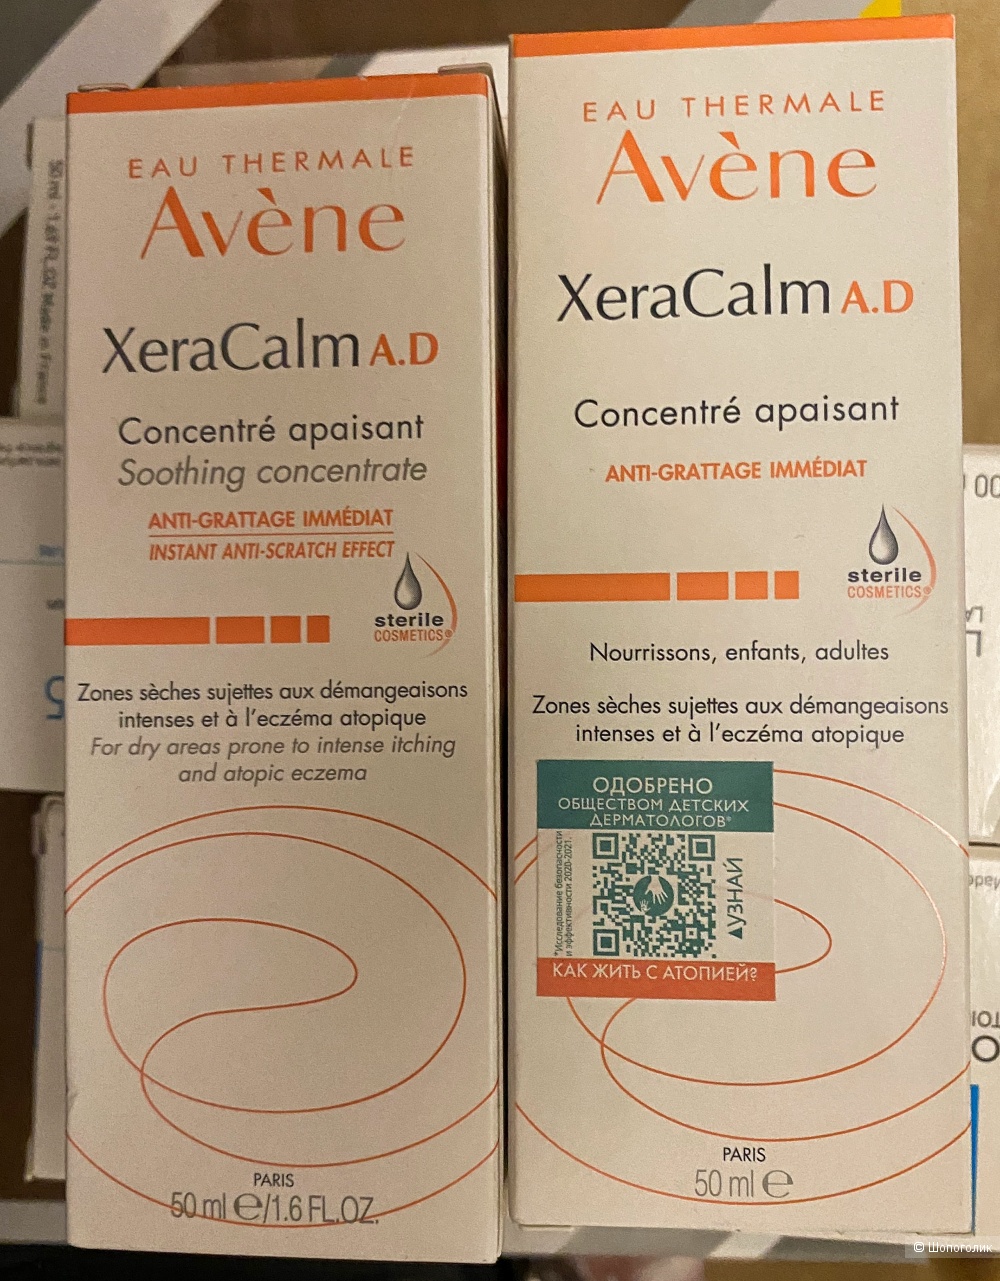 Avene XeraCalm A.D. Концентрат успокаивающий 50 ml цена за 1 шт.